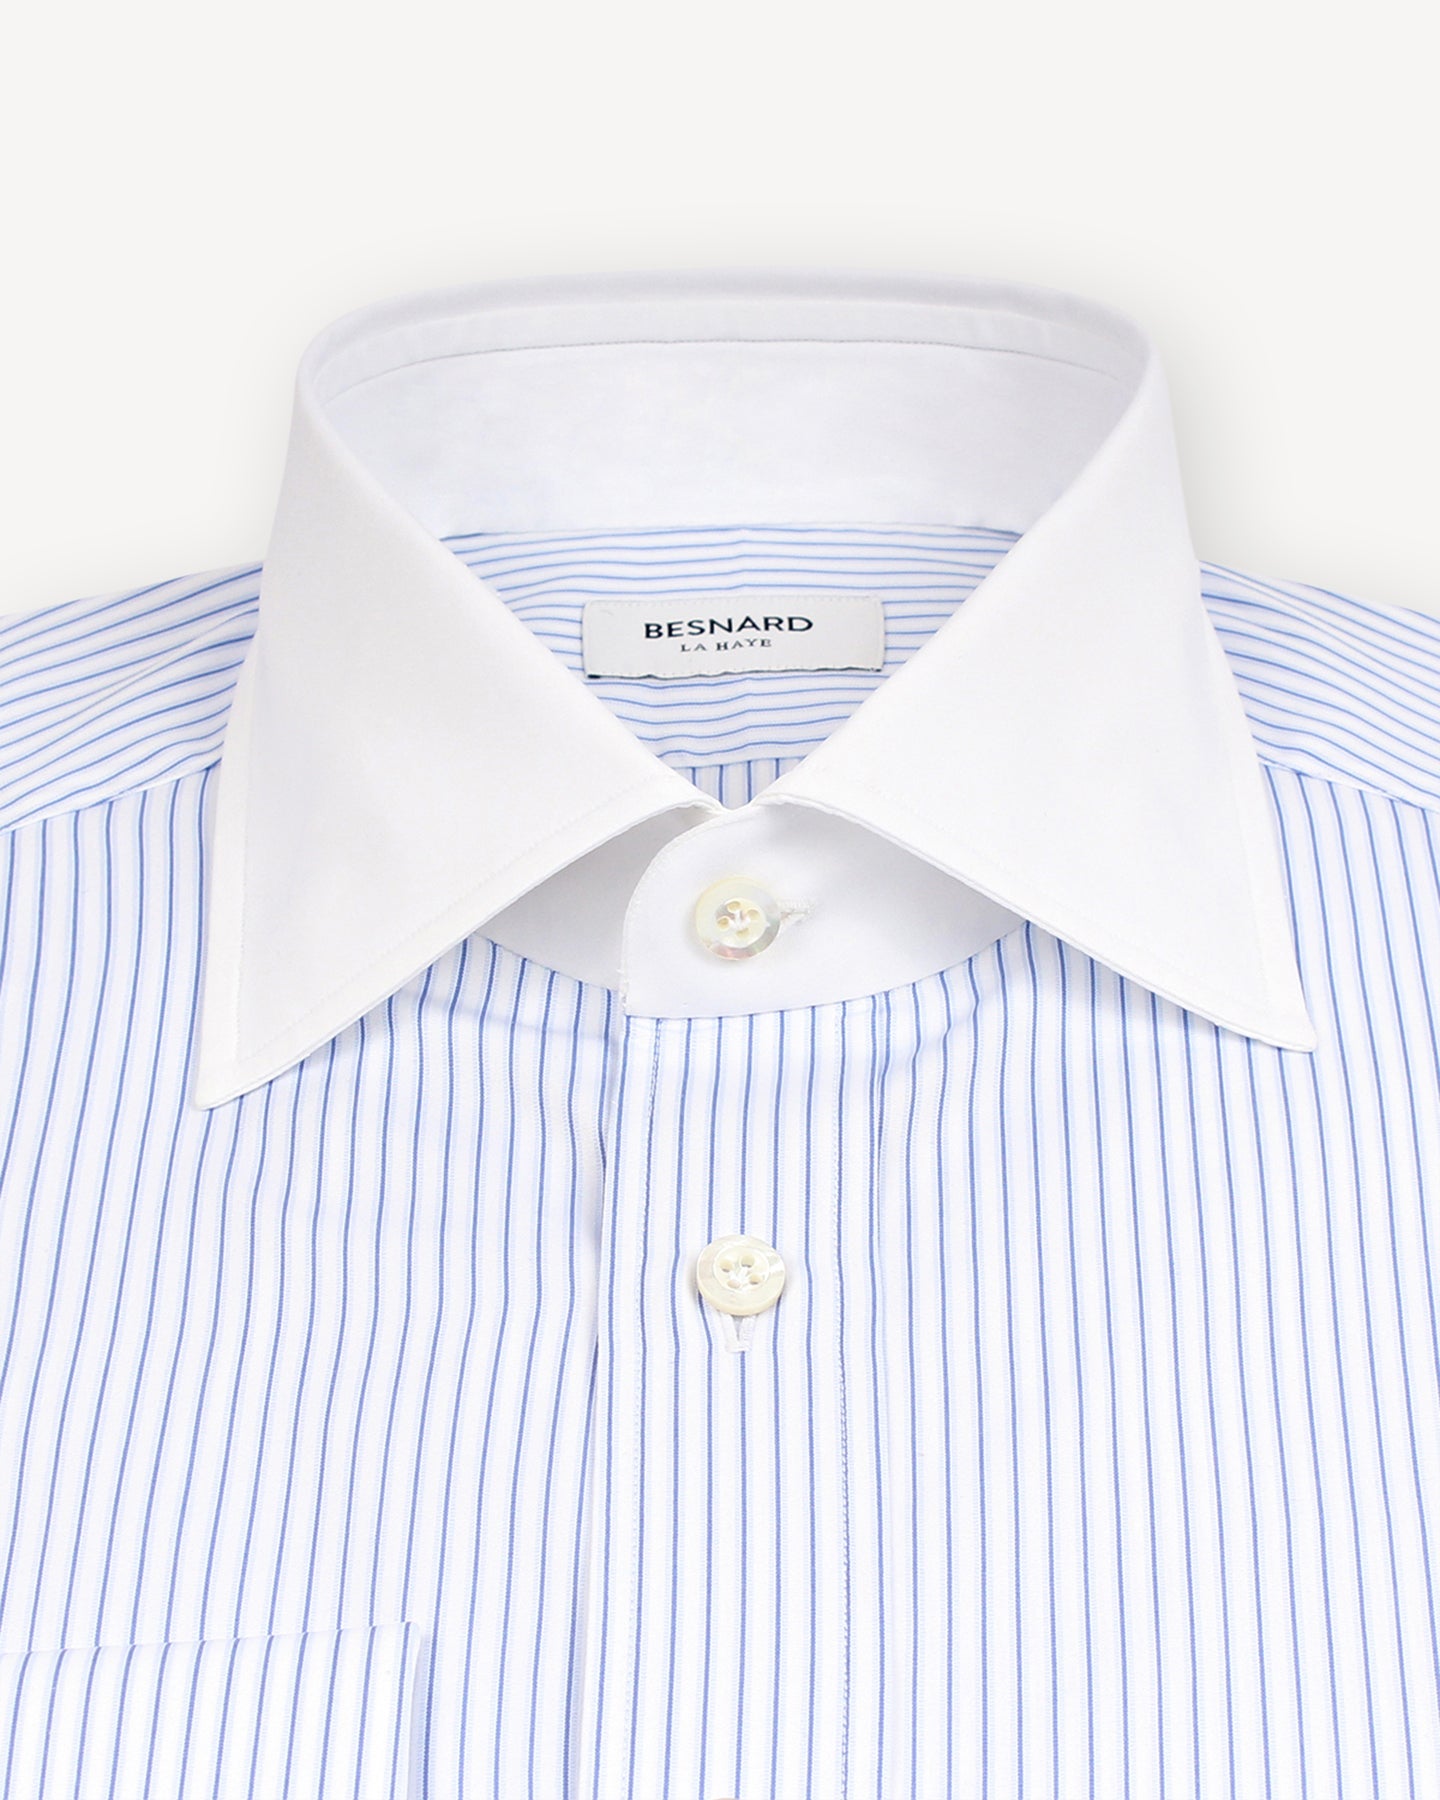 Blue striped poplin spread collar shirt with white contrast collar